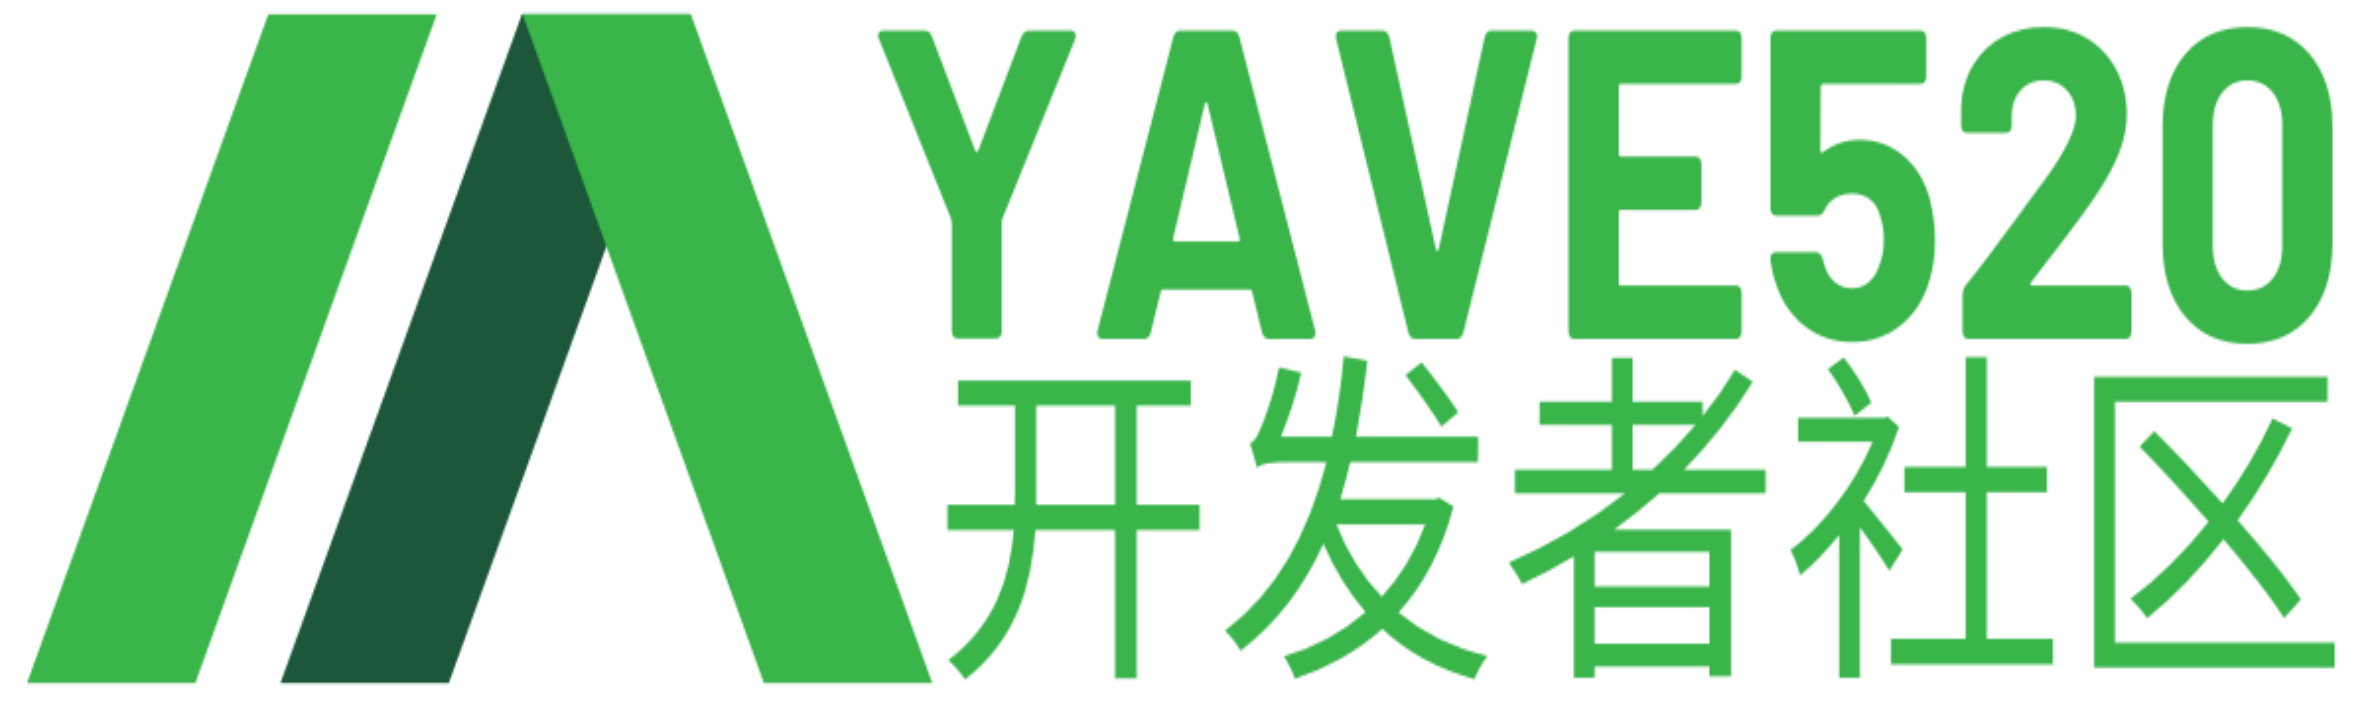 HTML5-Yave520-专业开发者社区